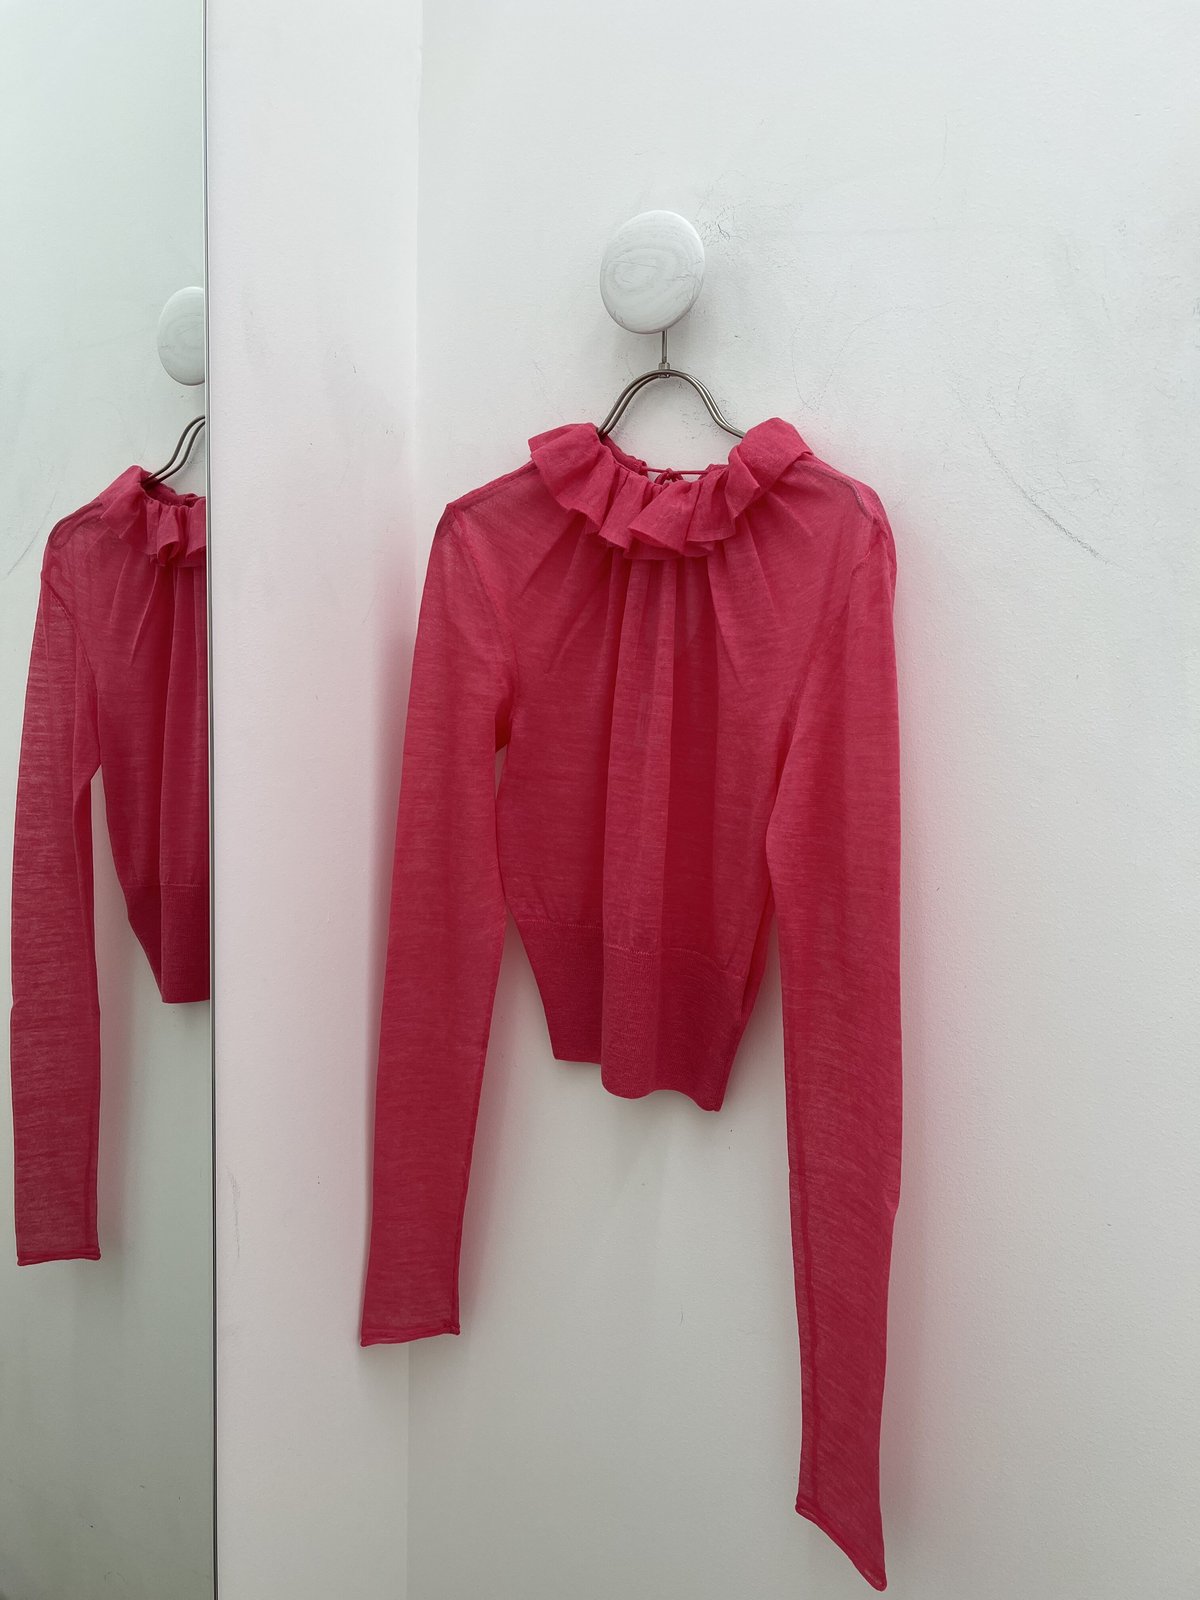 FETICO/alpaca sheer frilled knit top | jurk tokyo